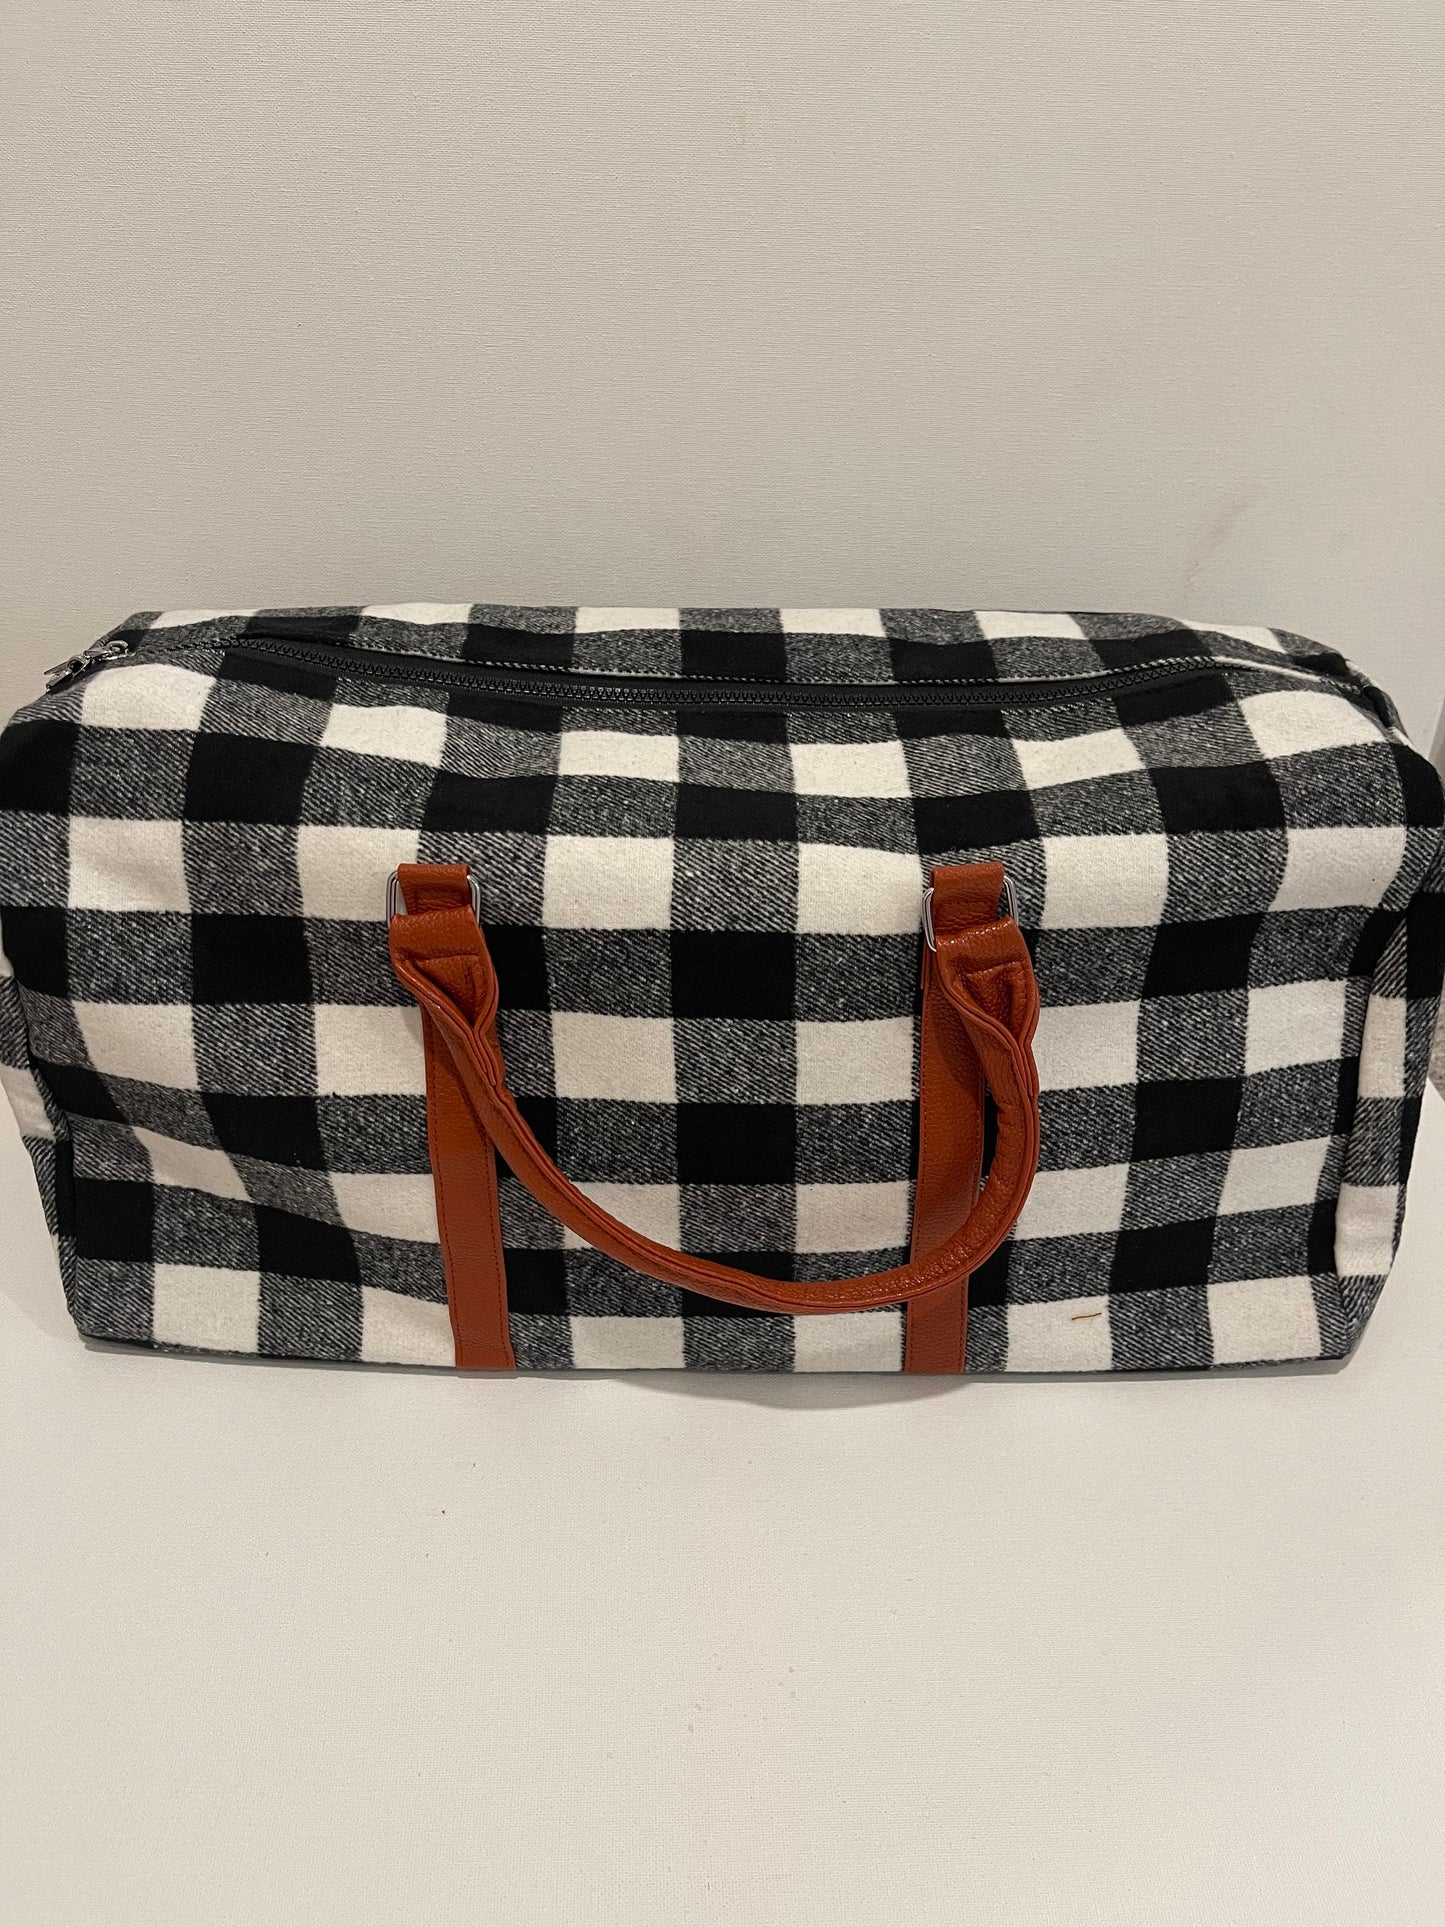 Monogrammed Buffalo Plaid Weekender, Duffle Bag, Personalized Bag